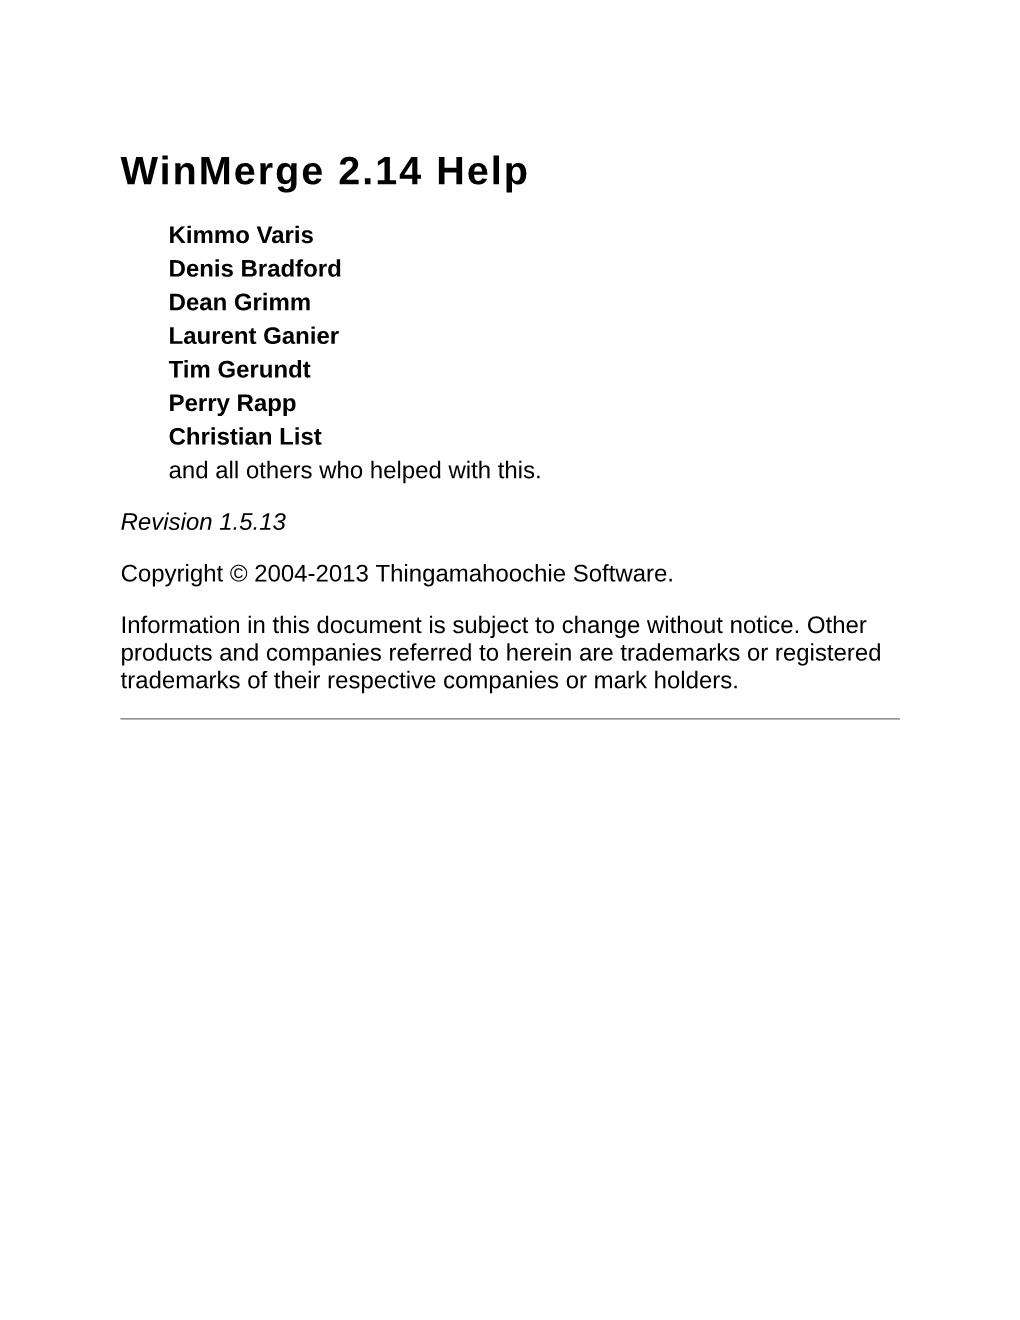 Winmerge Help